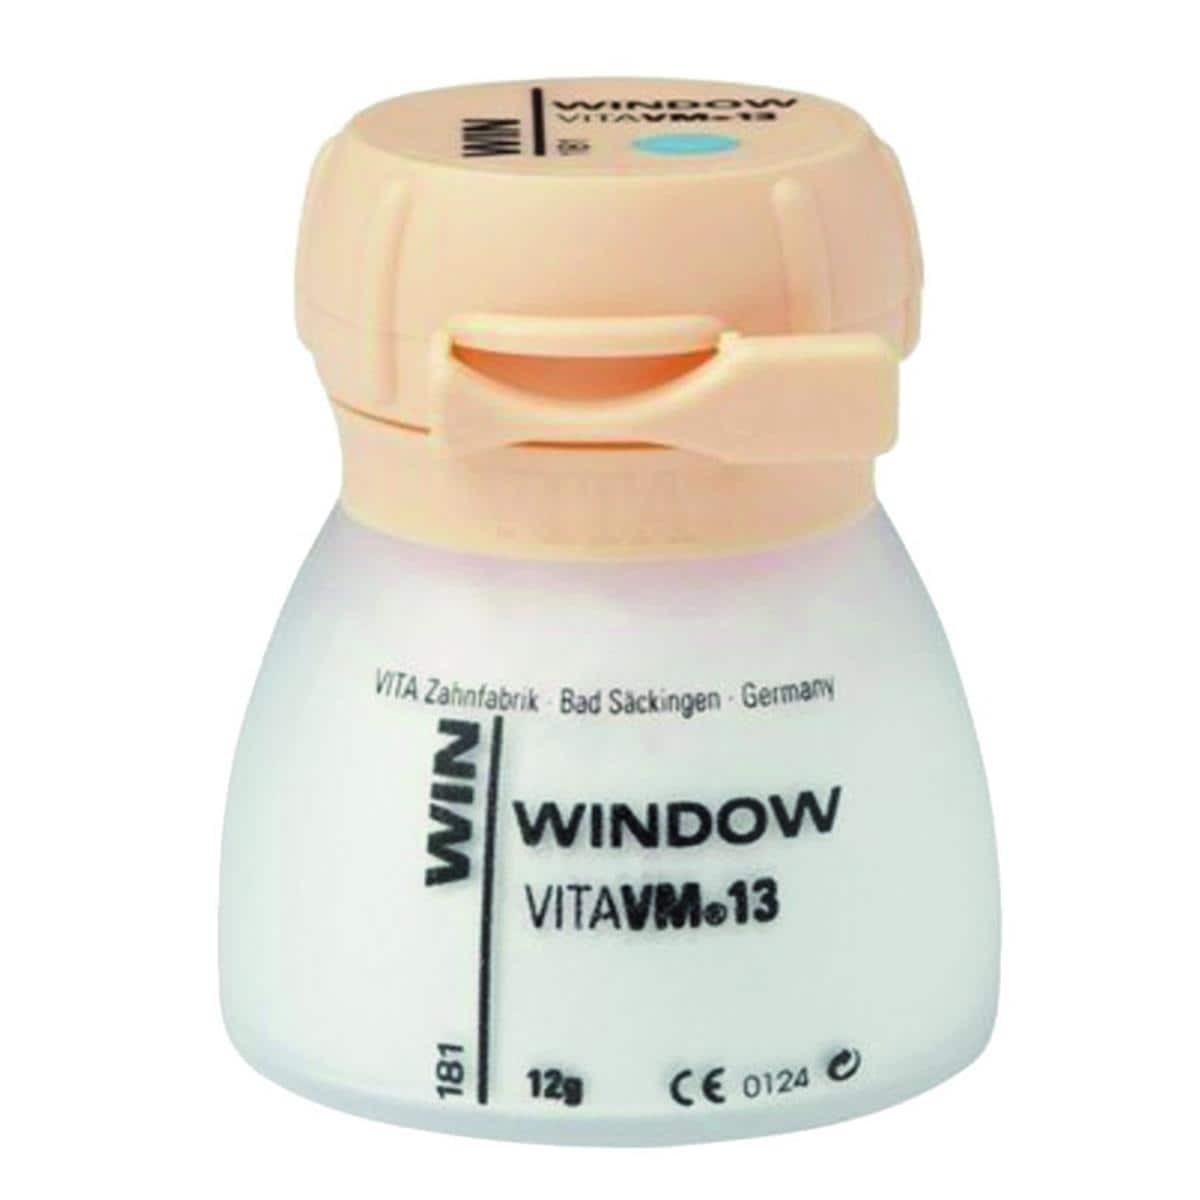 VM13 VITA - Window - WIN - Le pot de 12 g